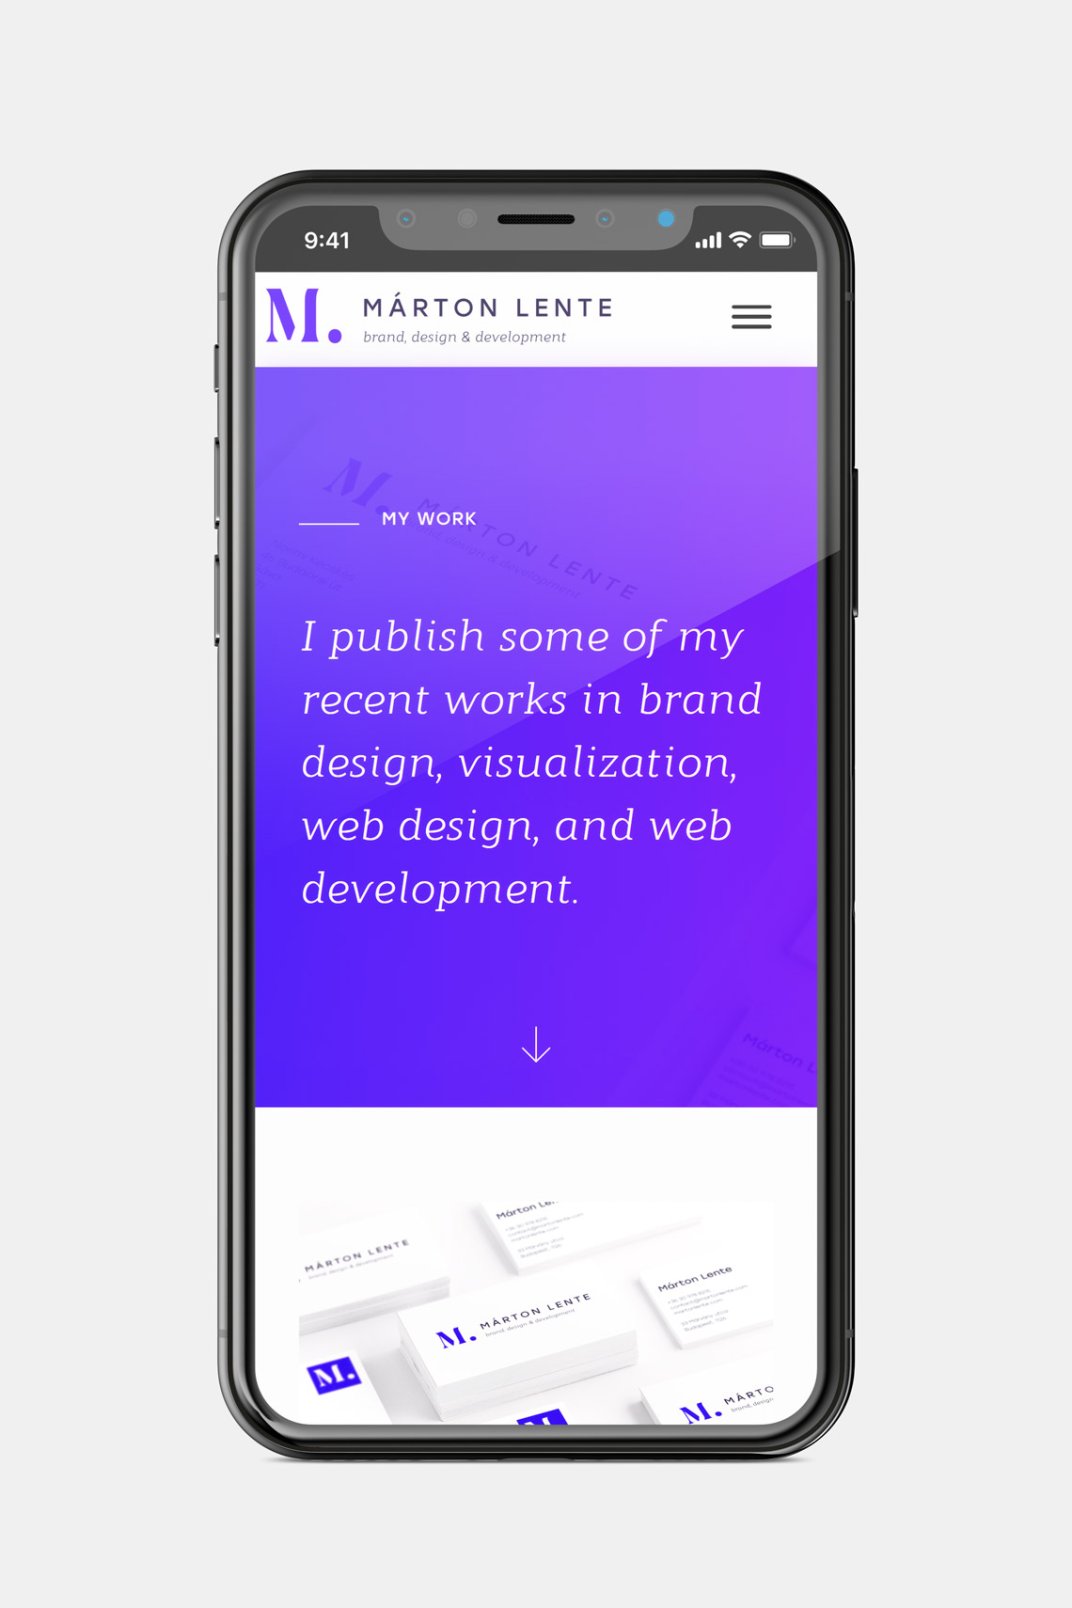 Márton Lente responsive web design my work page on phone